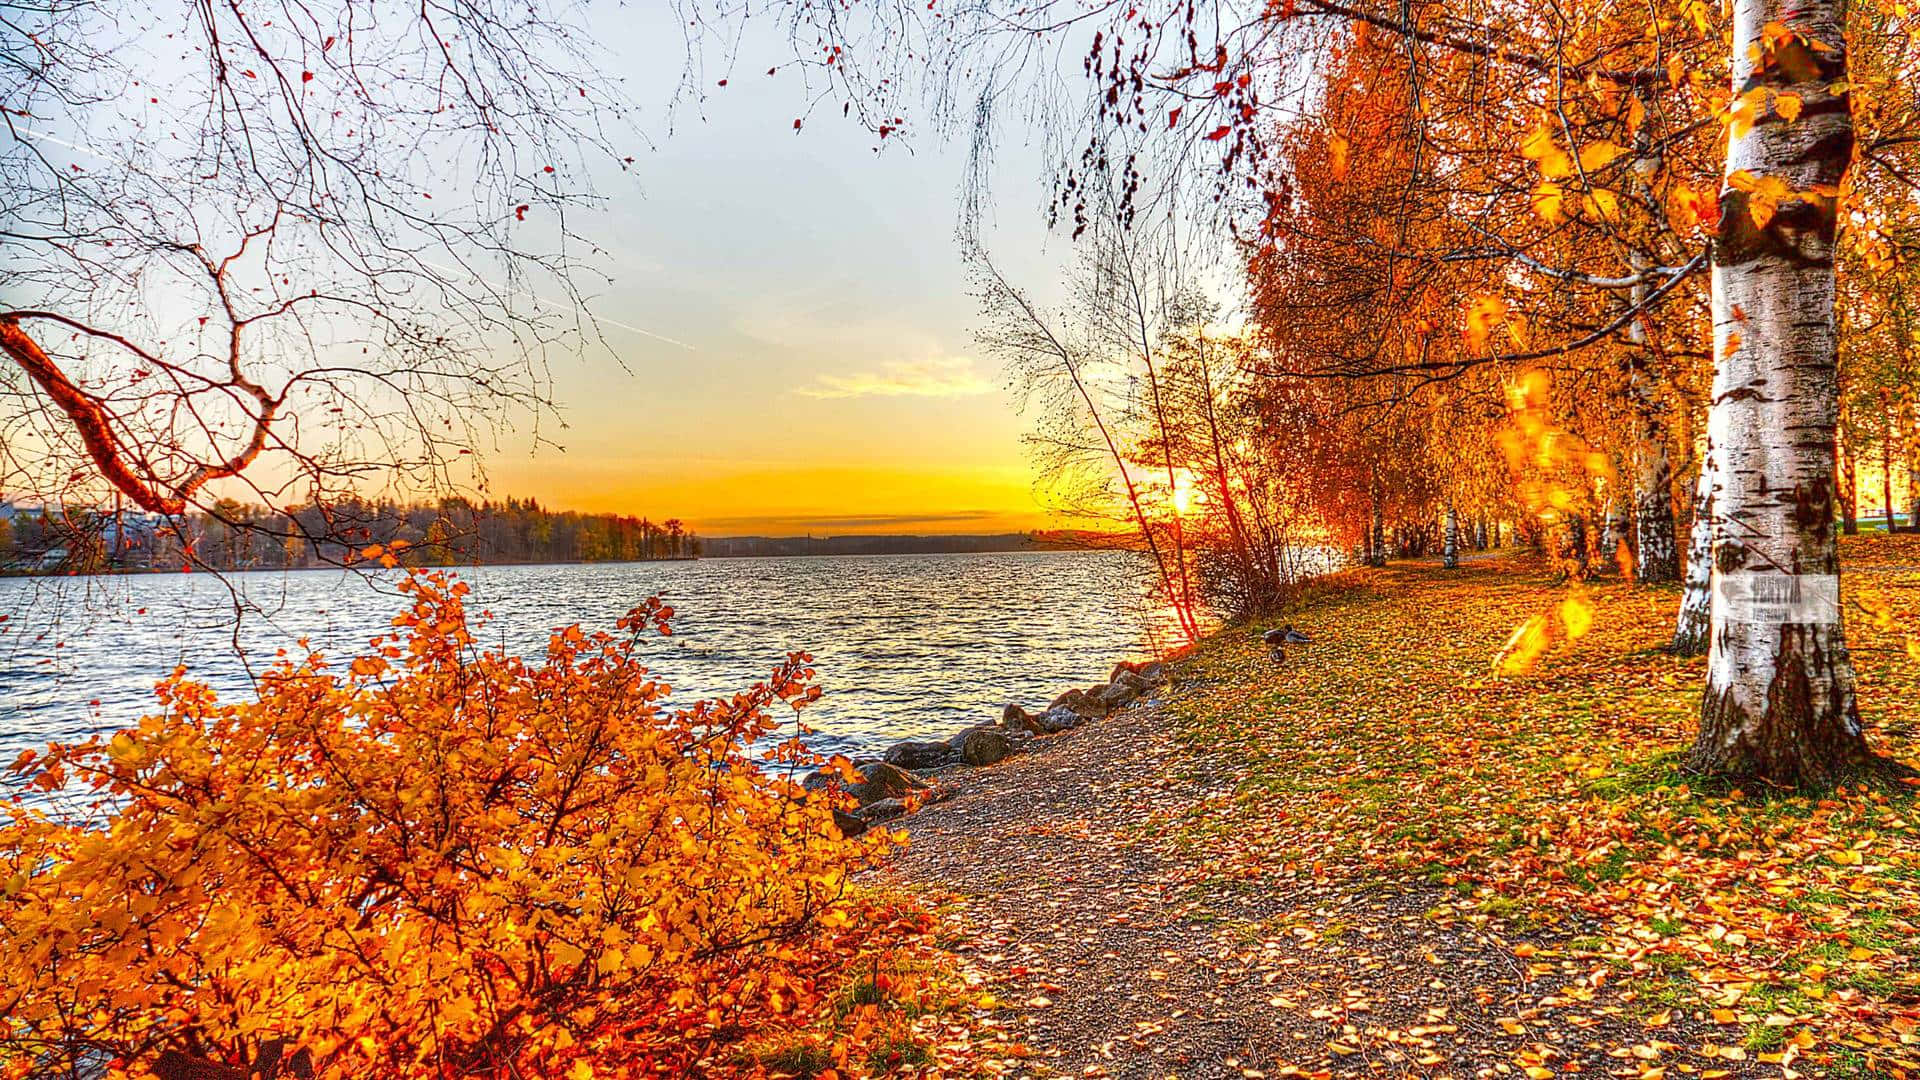 Stunning Autumn Scenery in High Resolution